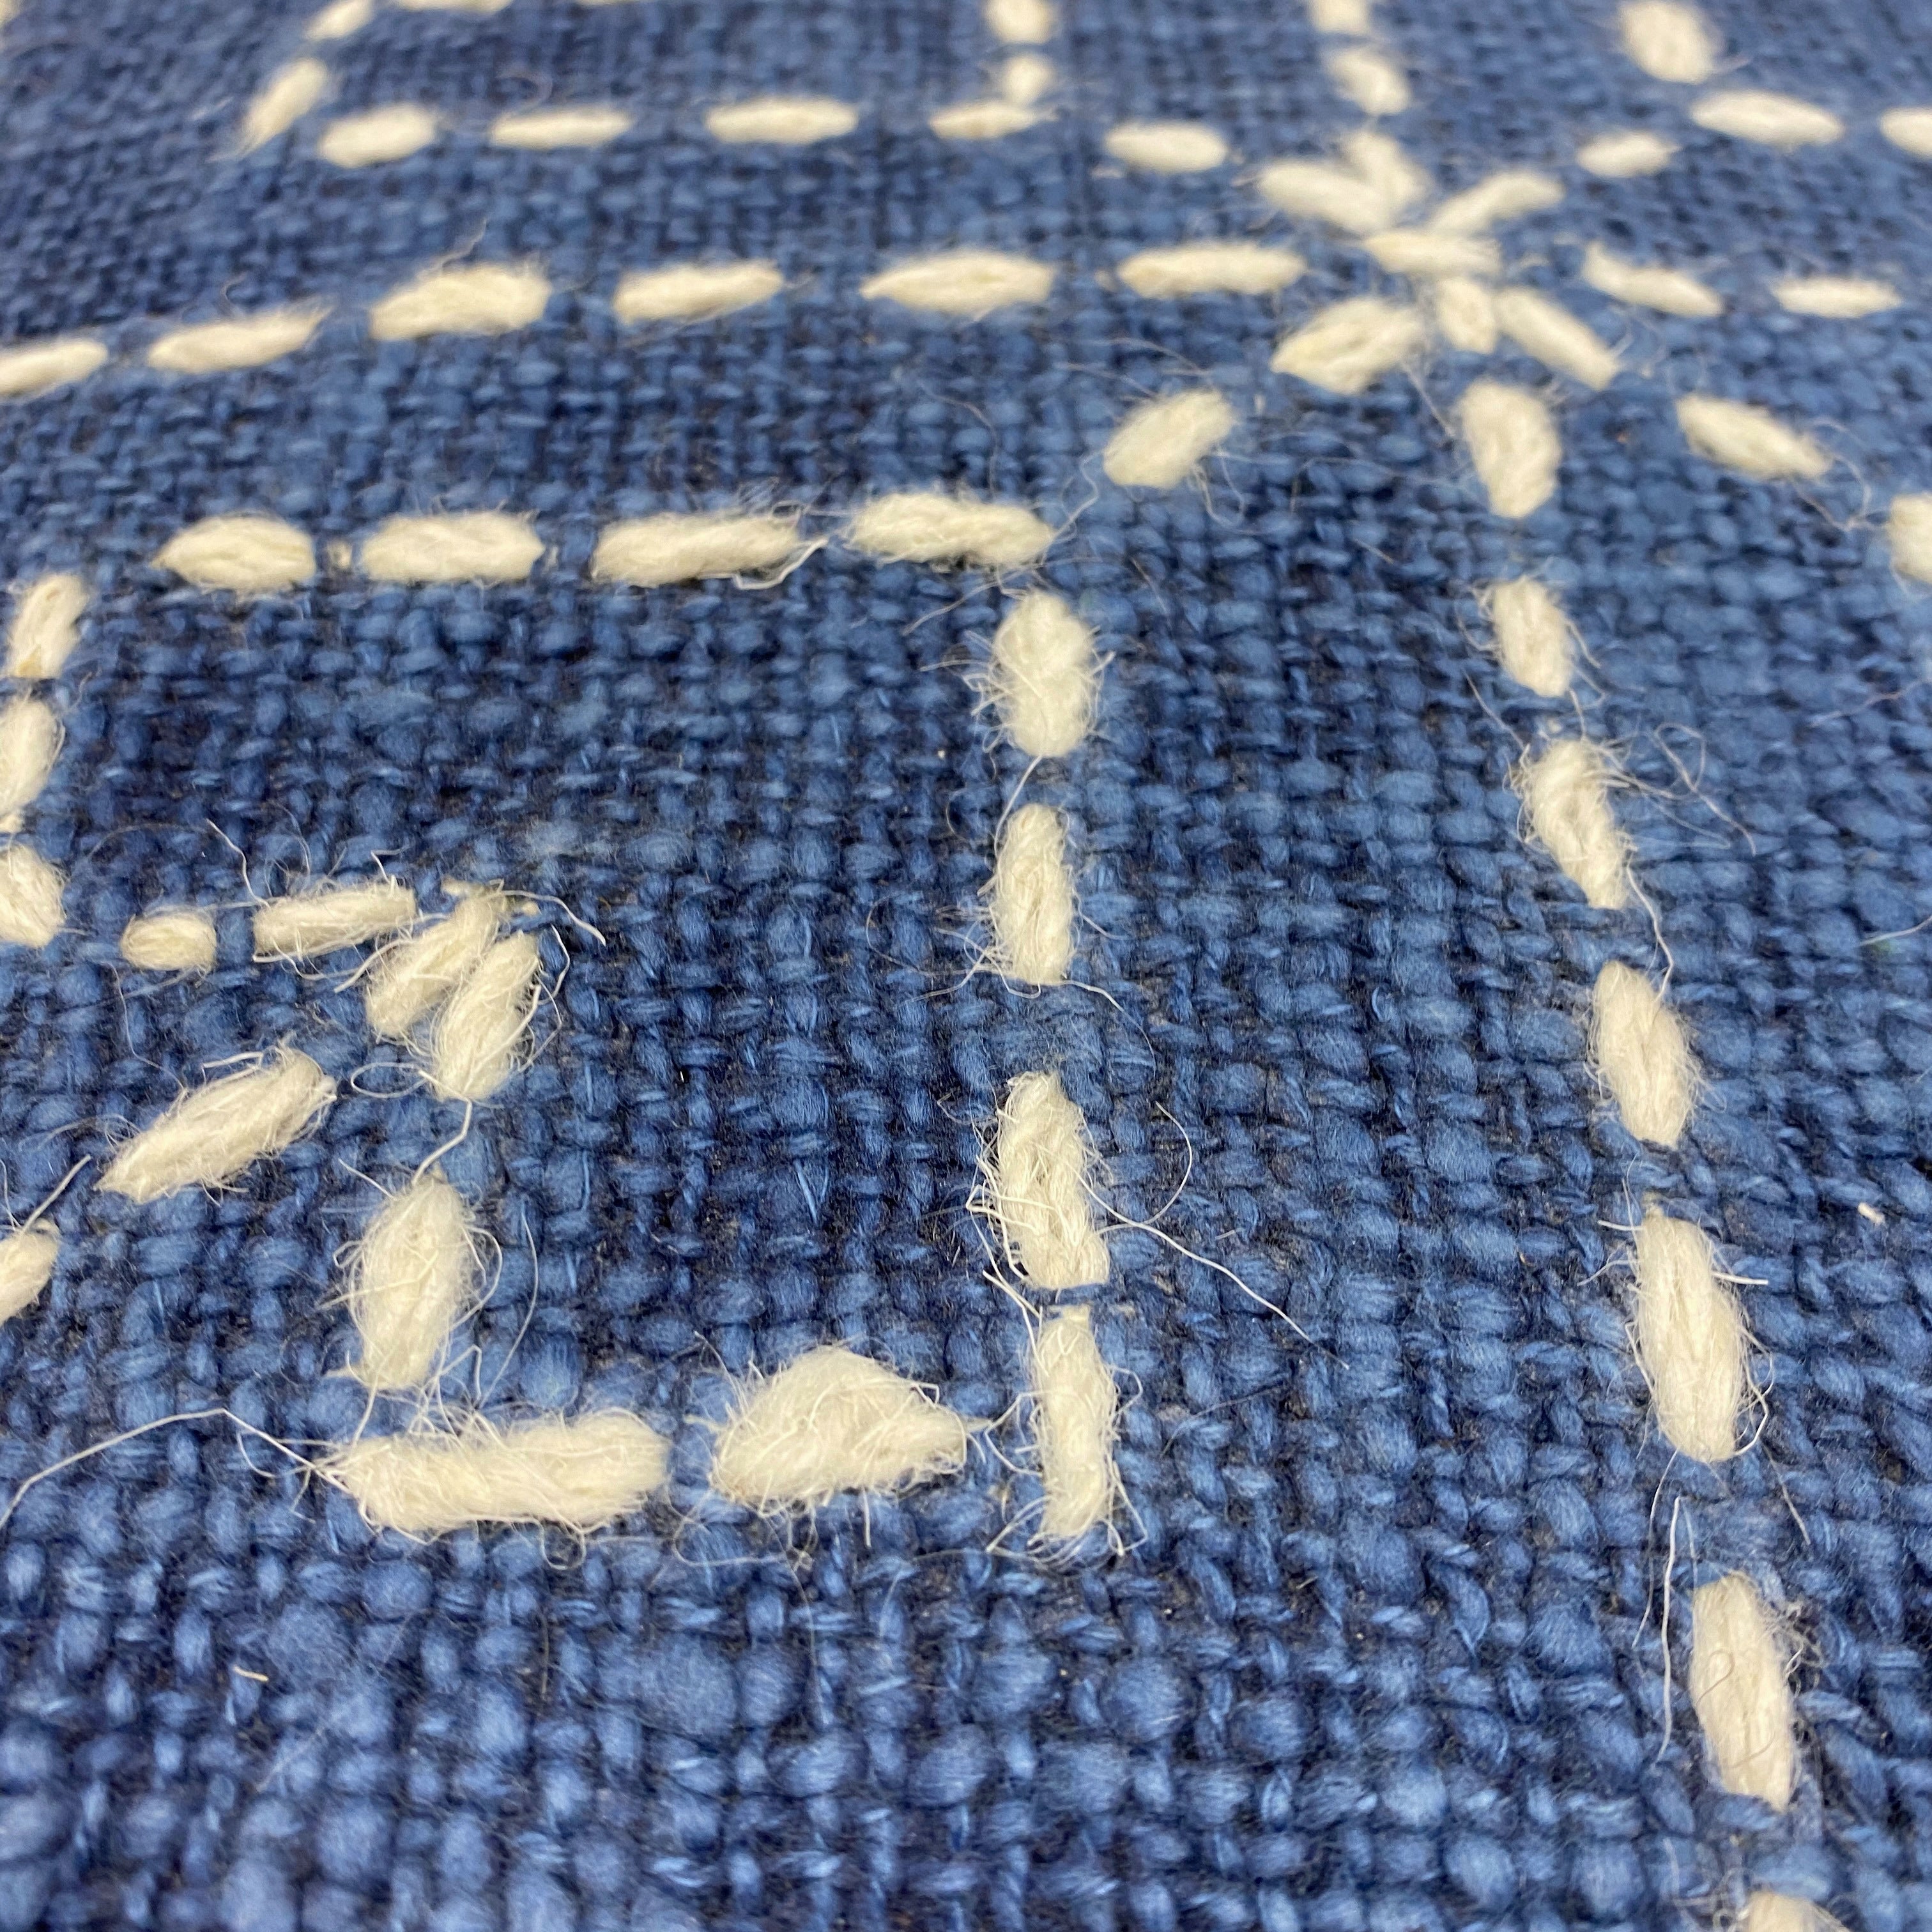 Ivory & Blue Patterned 'Wotton' Cushion